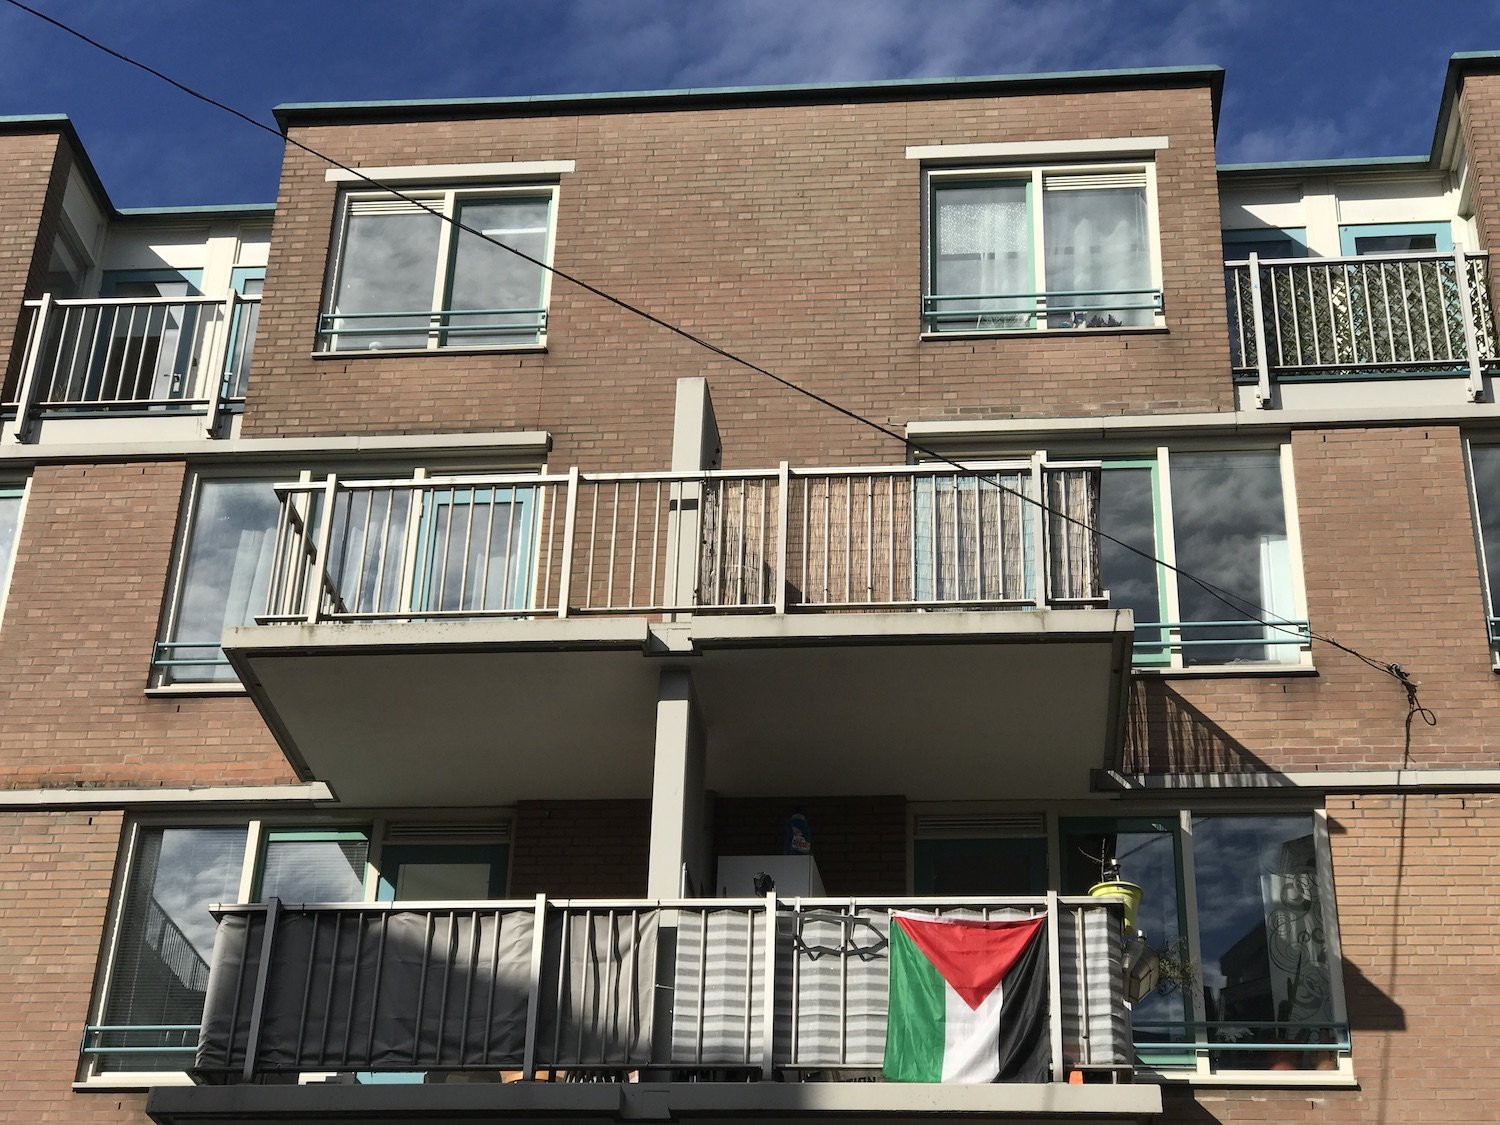 Amsterdam_Palestine_13.jpg